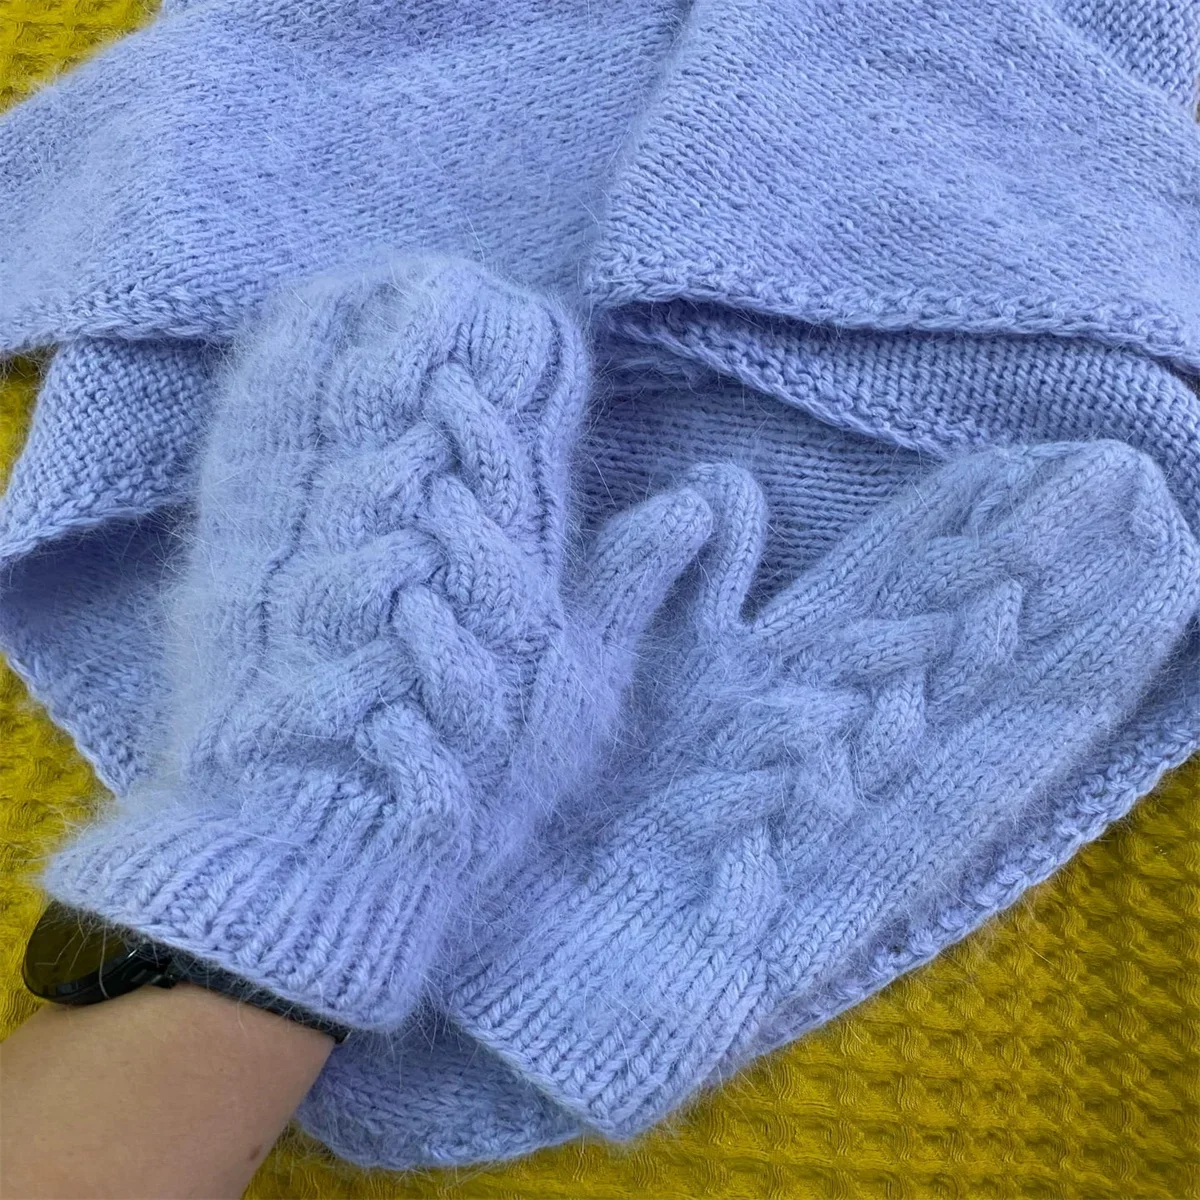 Long Plush Yarn 2-Ply Soft Knitwear Yarn Crochet Knitting Yarn for Hand  Knitting Sweater Hat Socks Baby Needlework 340m 70g